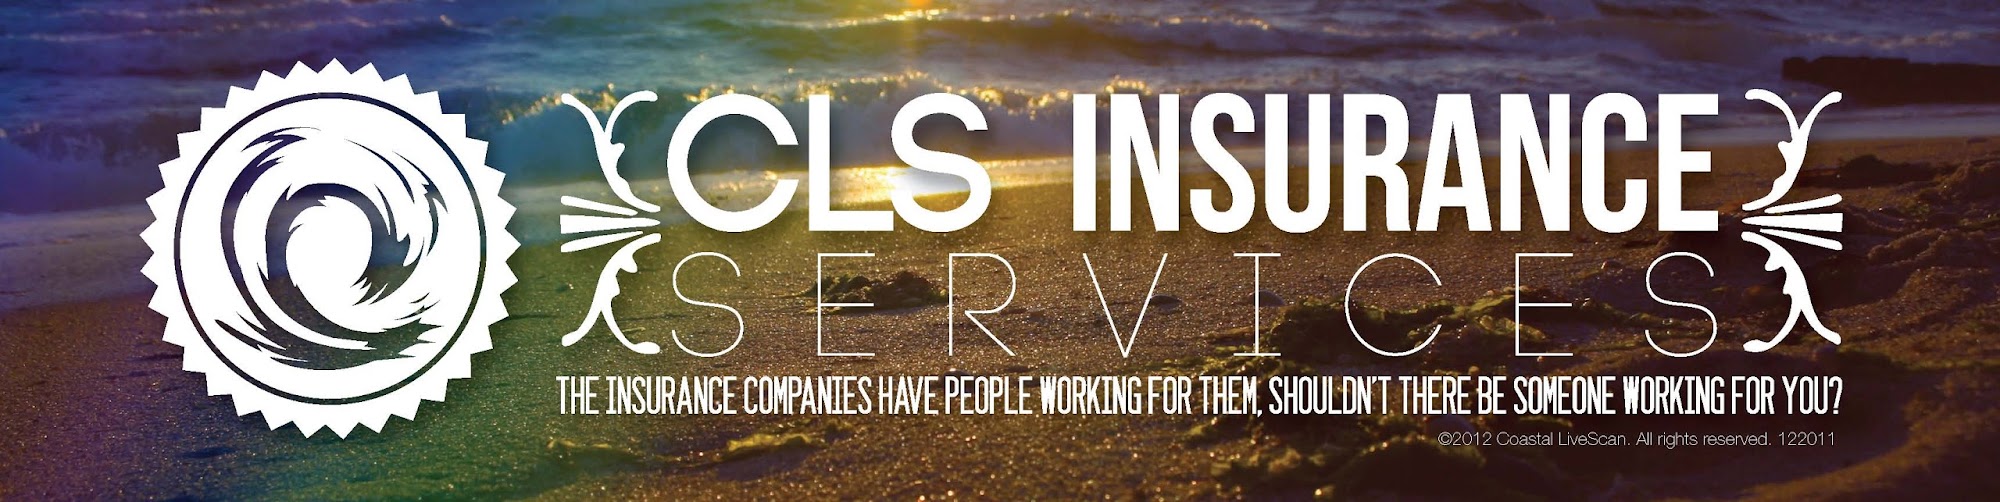 CLS Insurance Services - Coastal Live Scan